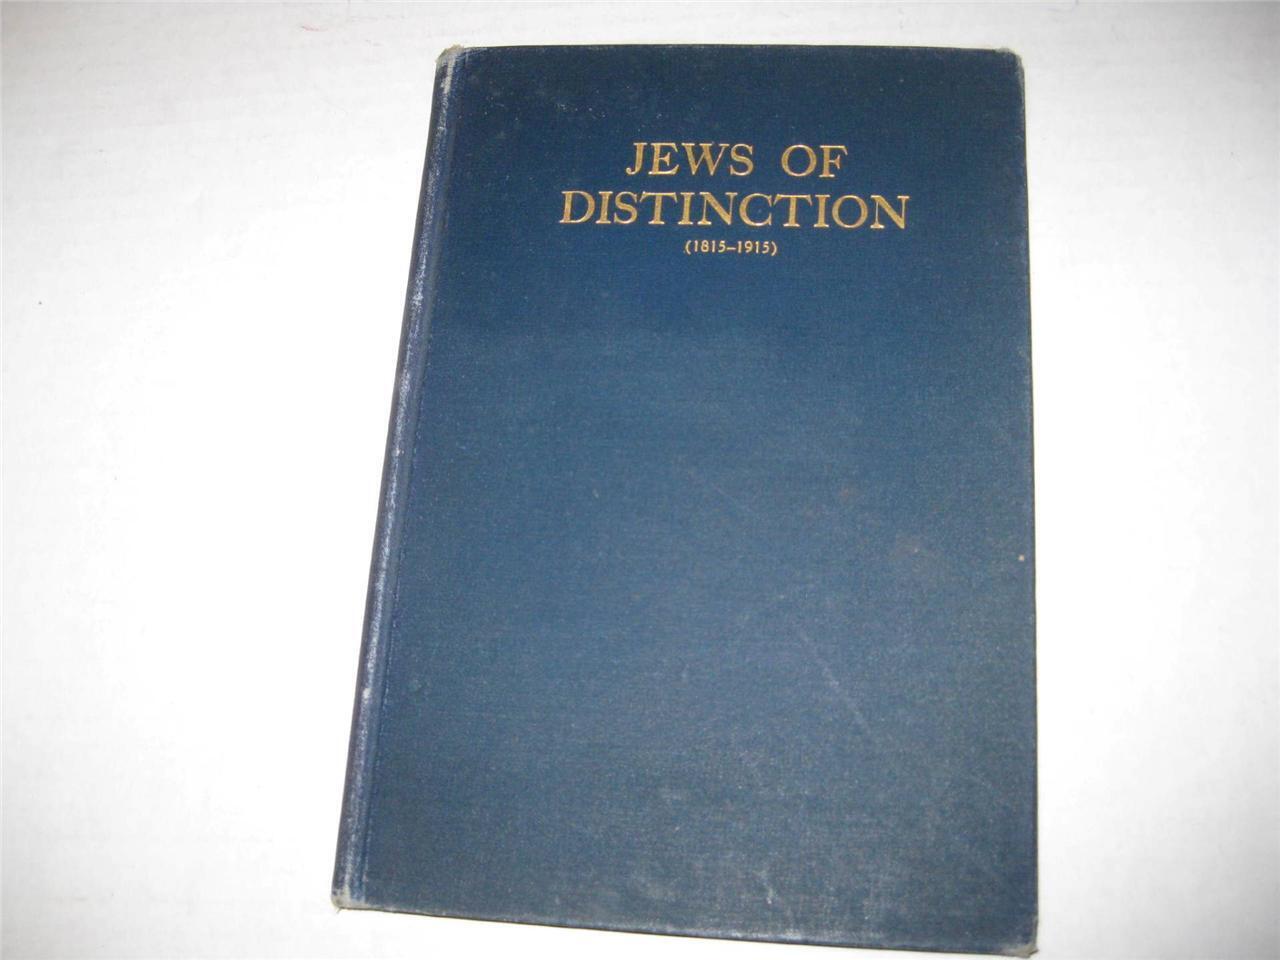 1919 Jews of distinction (1815-1915) by Joseph Jacobs VERY RARE invaluable info